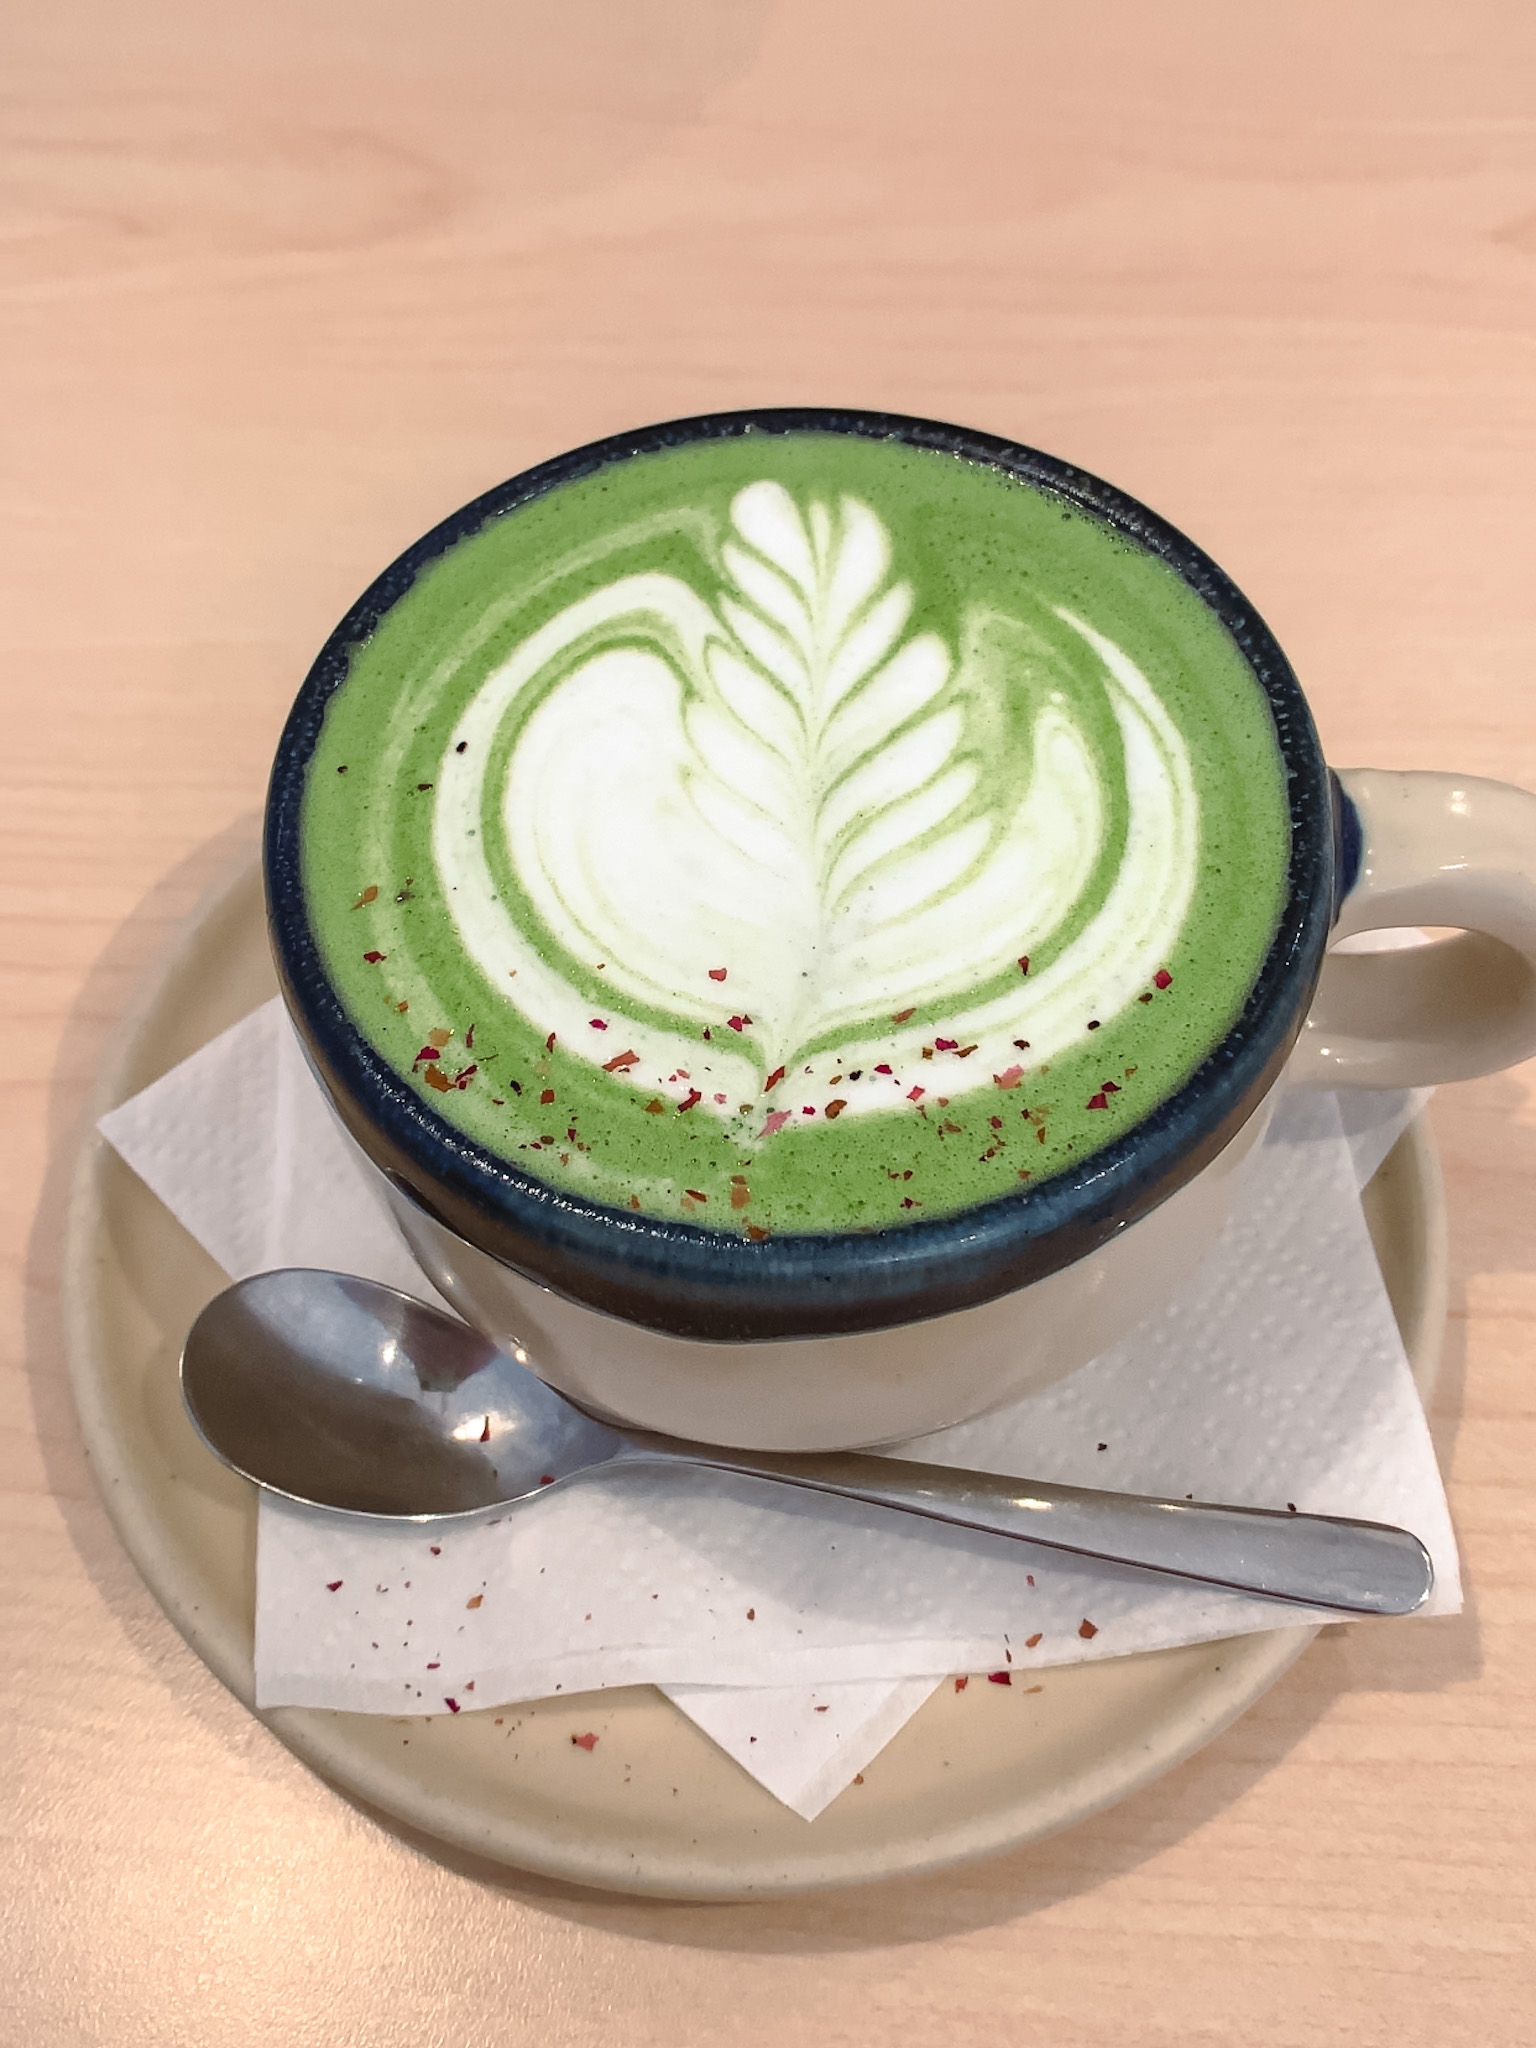 Kyoto Love matcha latte at Platform Espresso Bar in Markham, Ontario